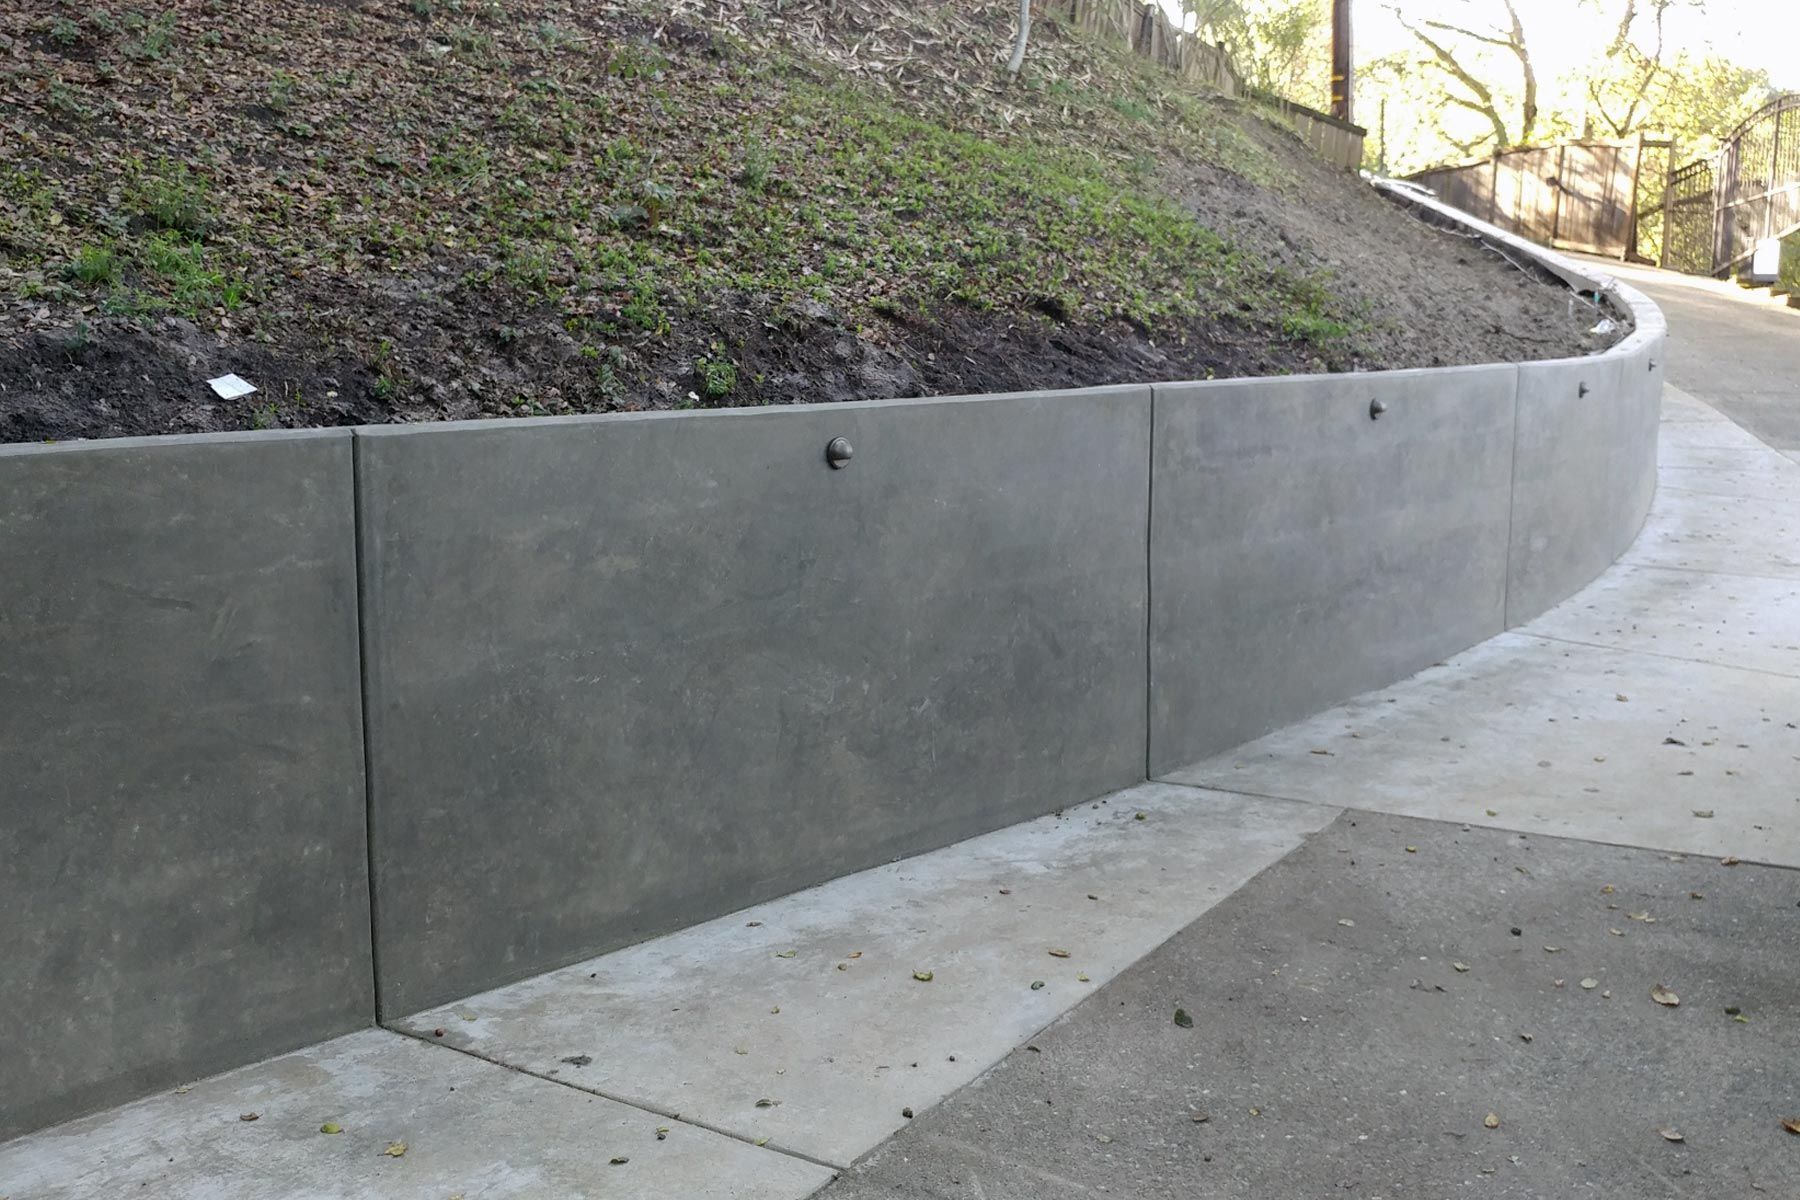 Wall retaining blocks inter locking — Benny’s Concrete Formwork & Reinforcement in Northern Rivers, NSW